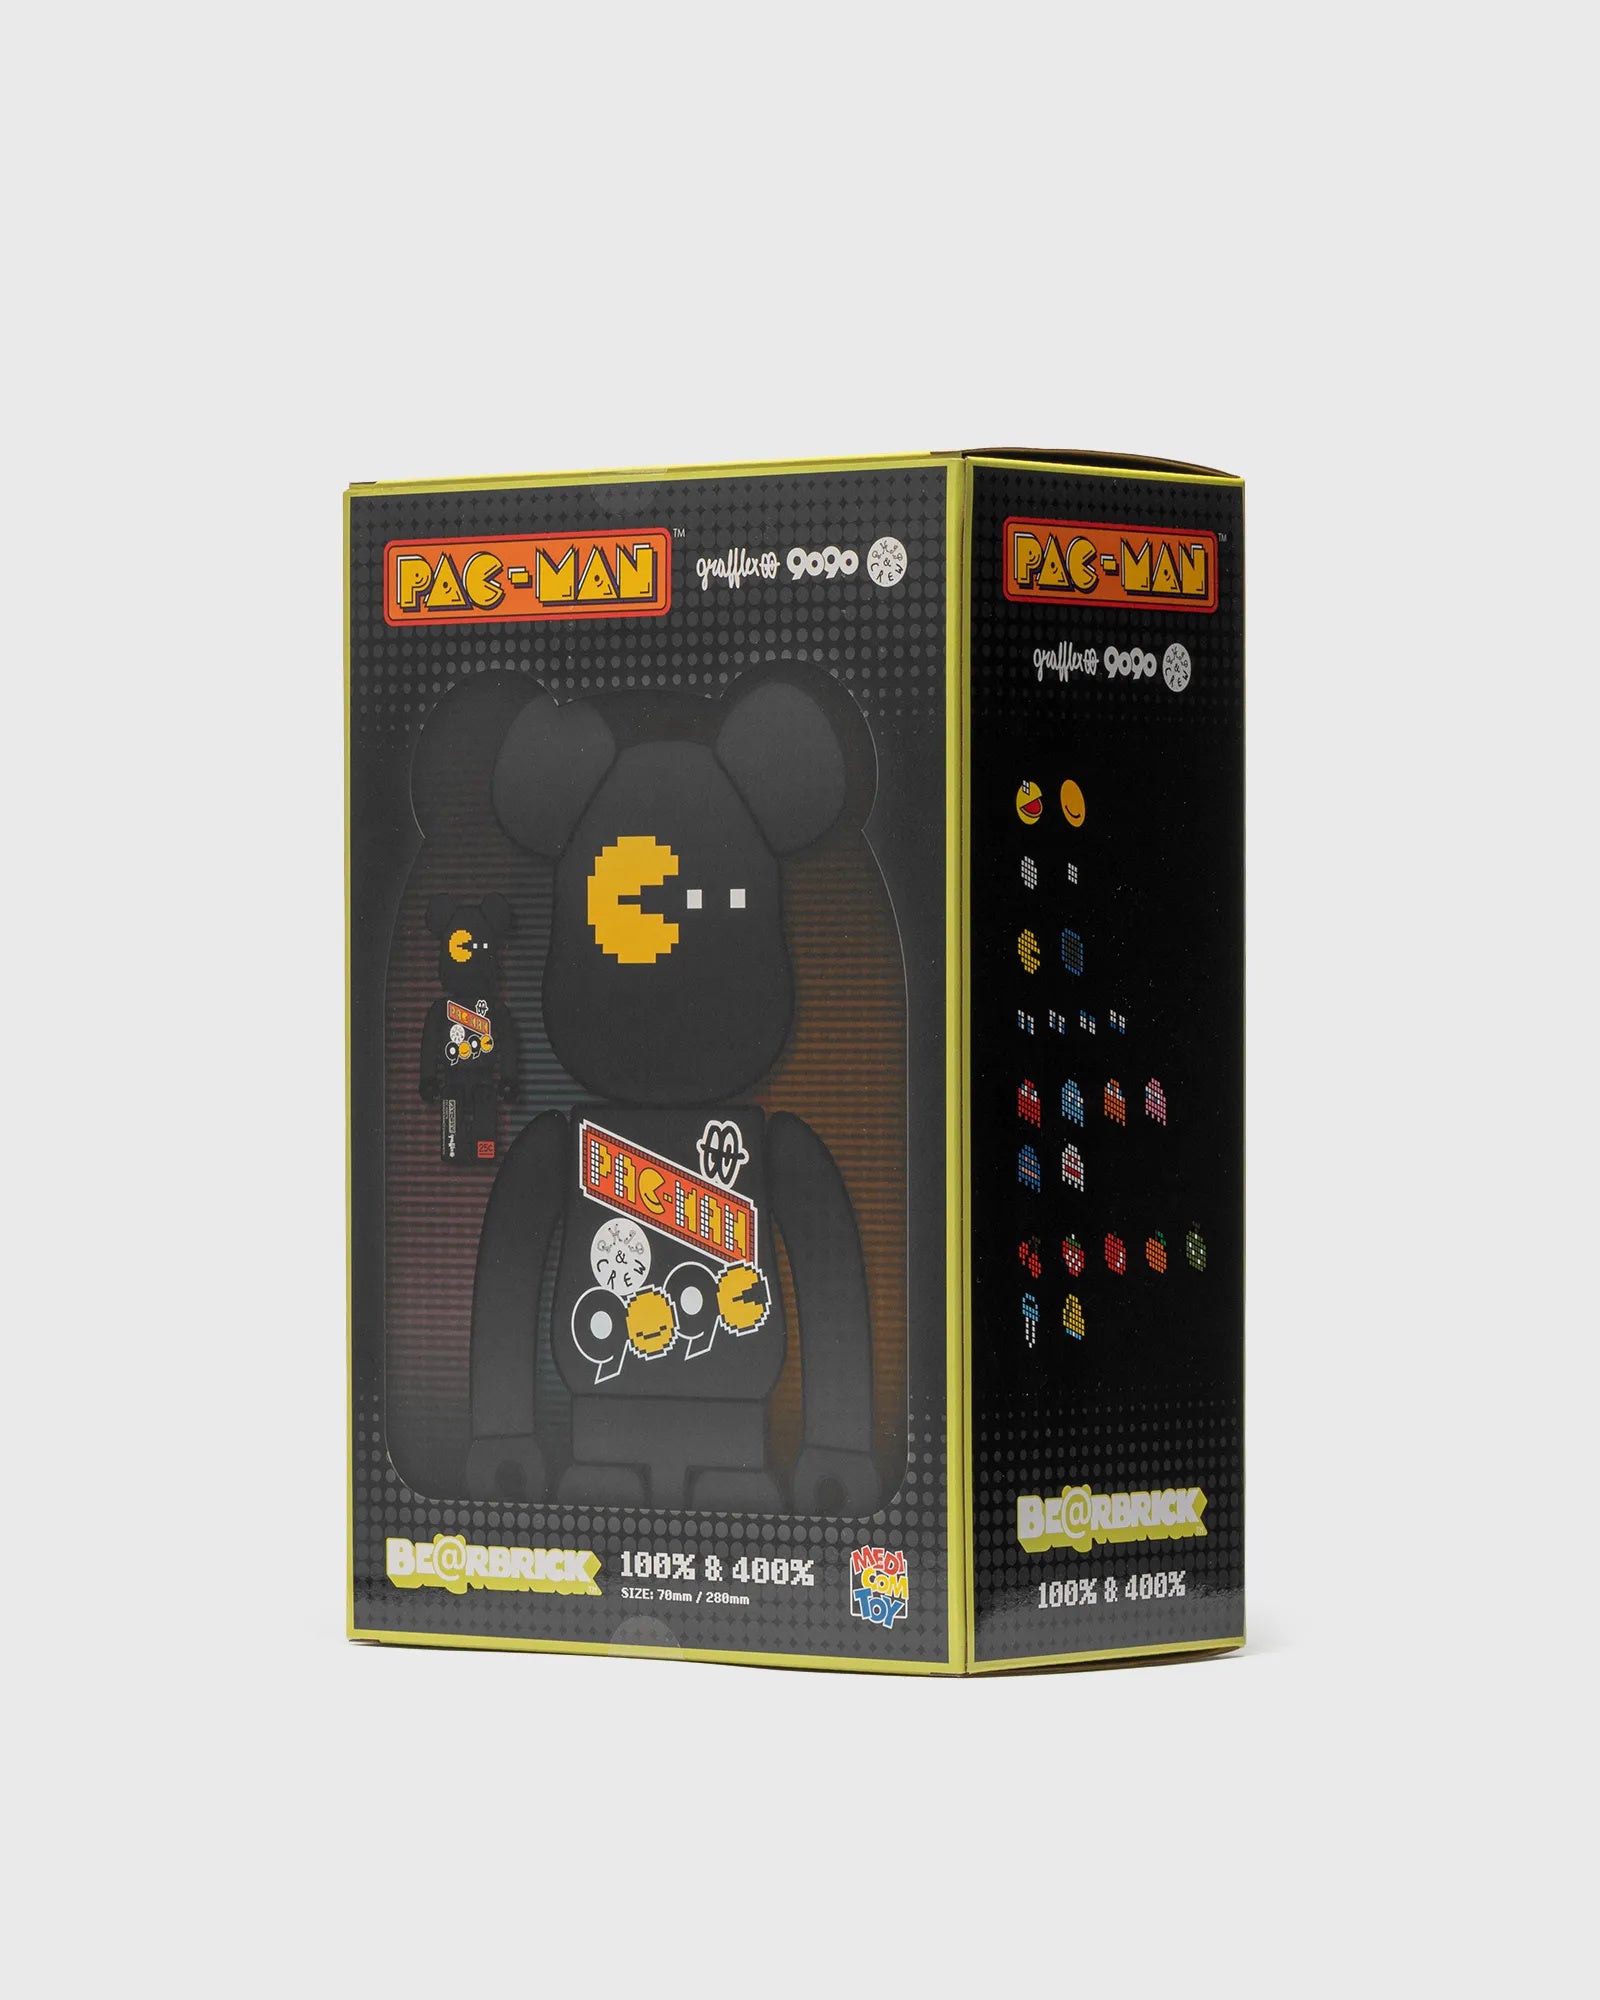 400% & 100% Bearbrick Set - Pac Man x Grafflex (9090 x S.H.I.P & Crew)